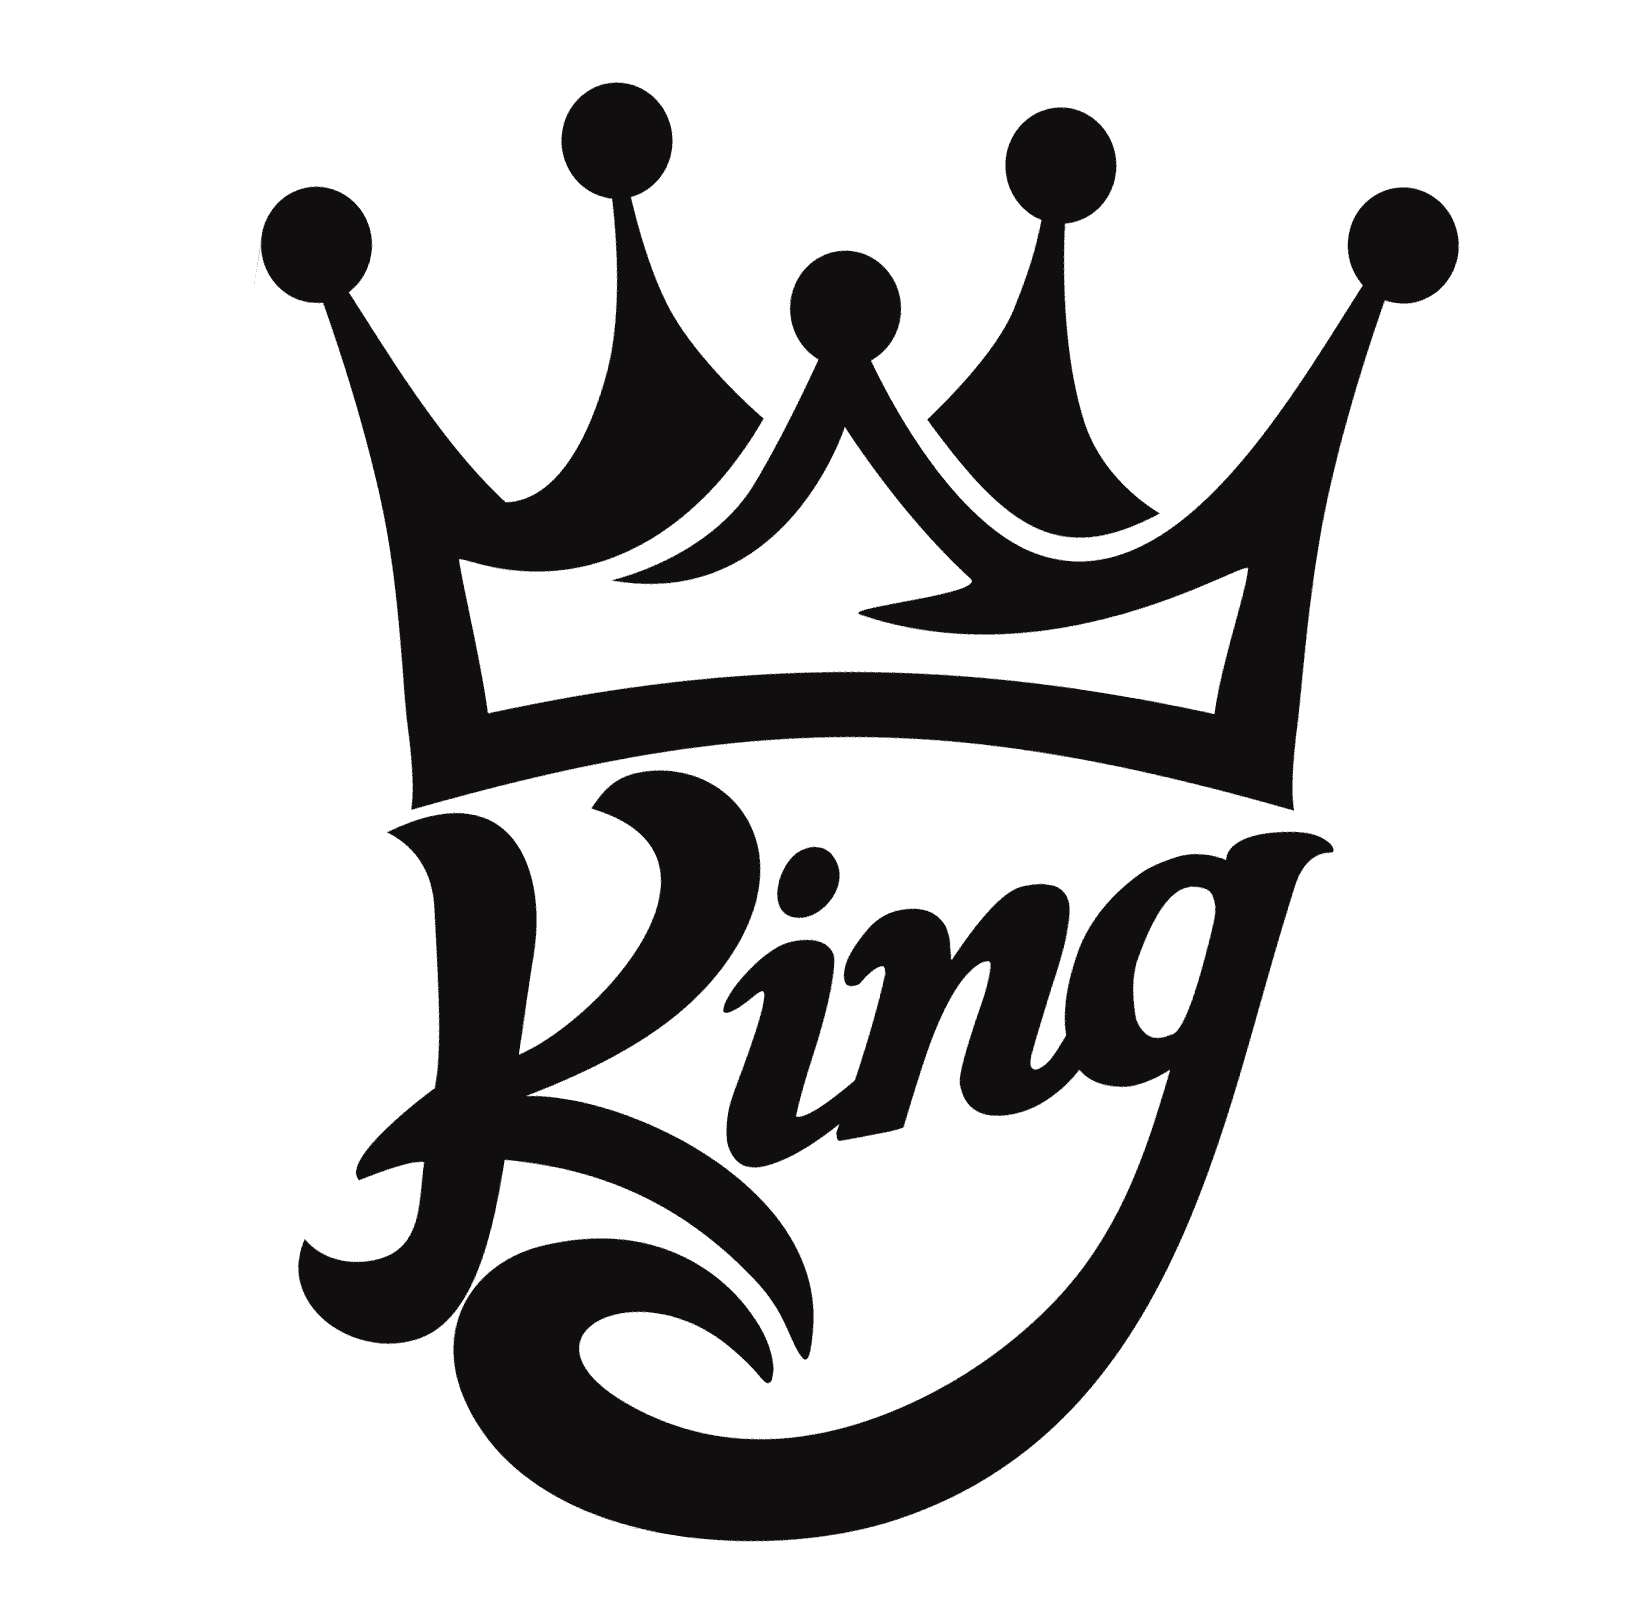 rural-king-logo-vector | Saleslink Rep Firm